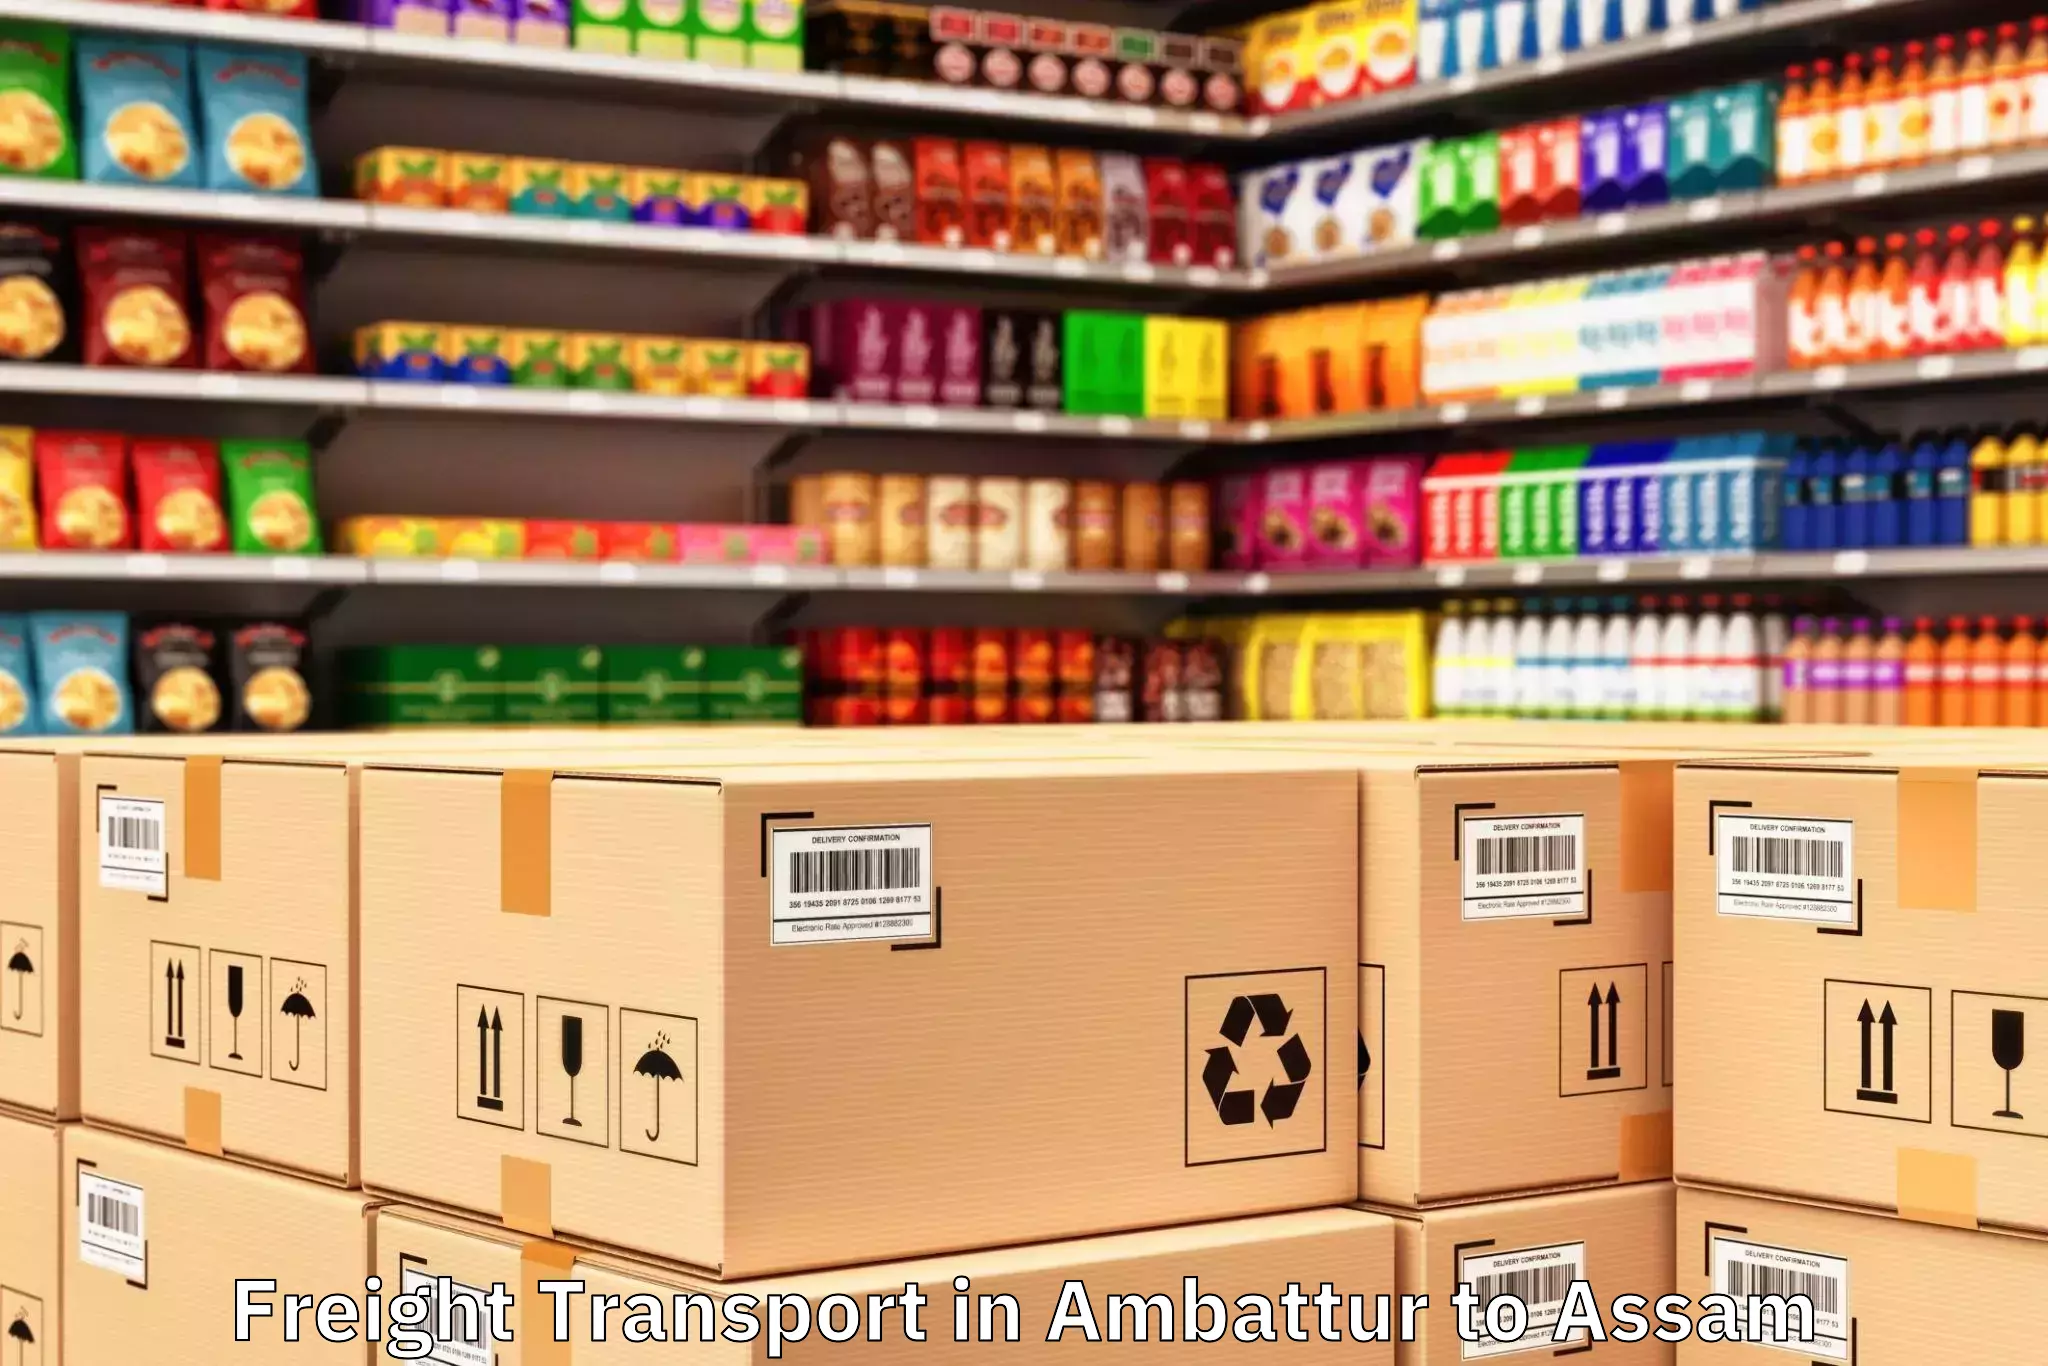 Professional Ambattur to Assam Freight Transport